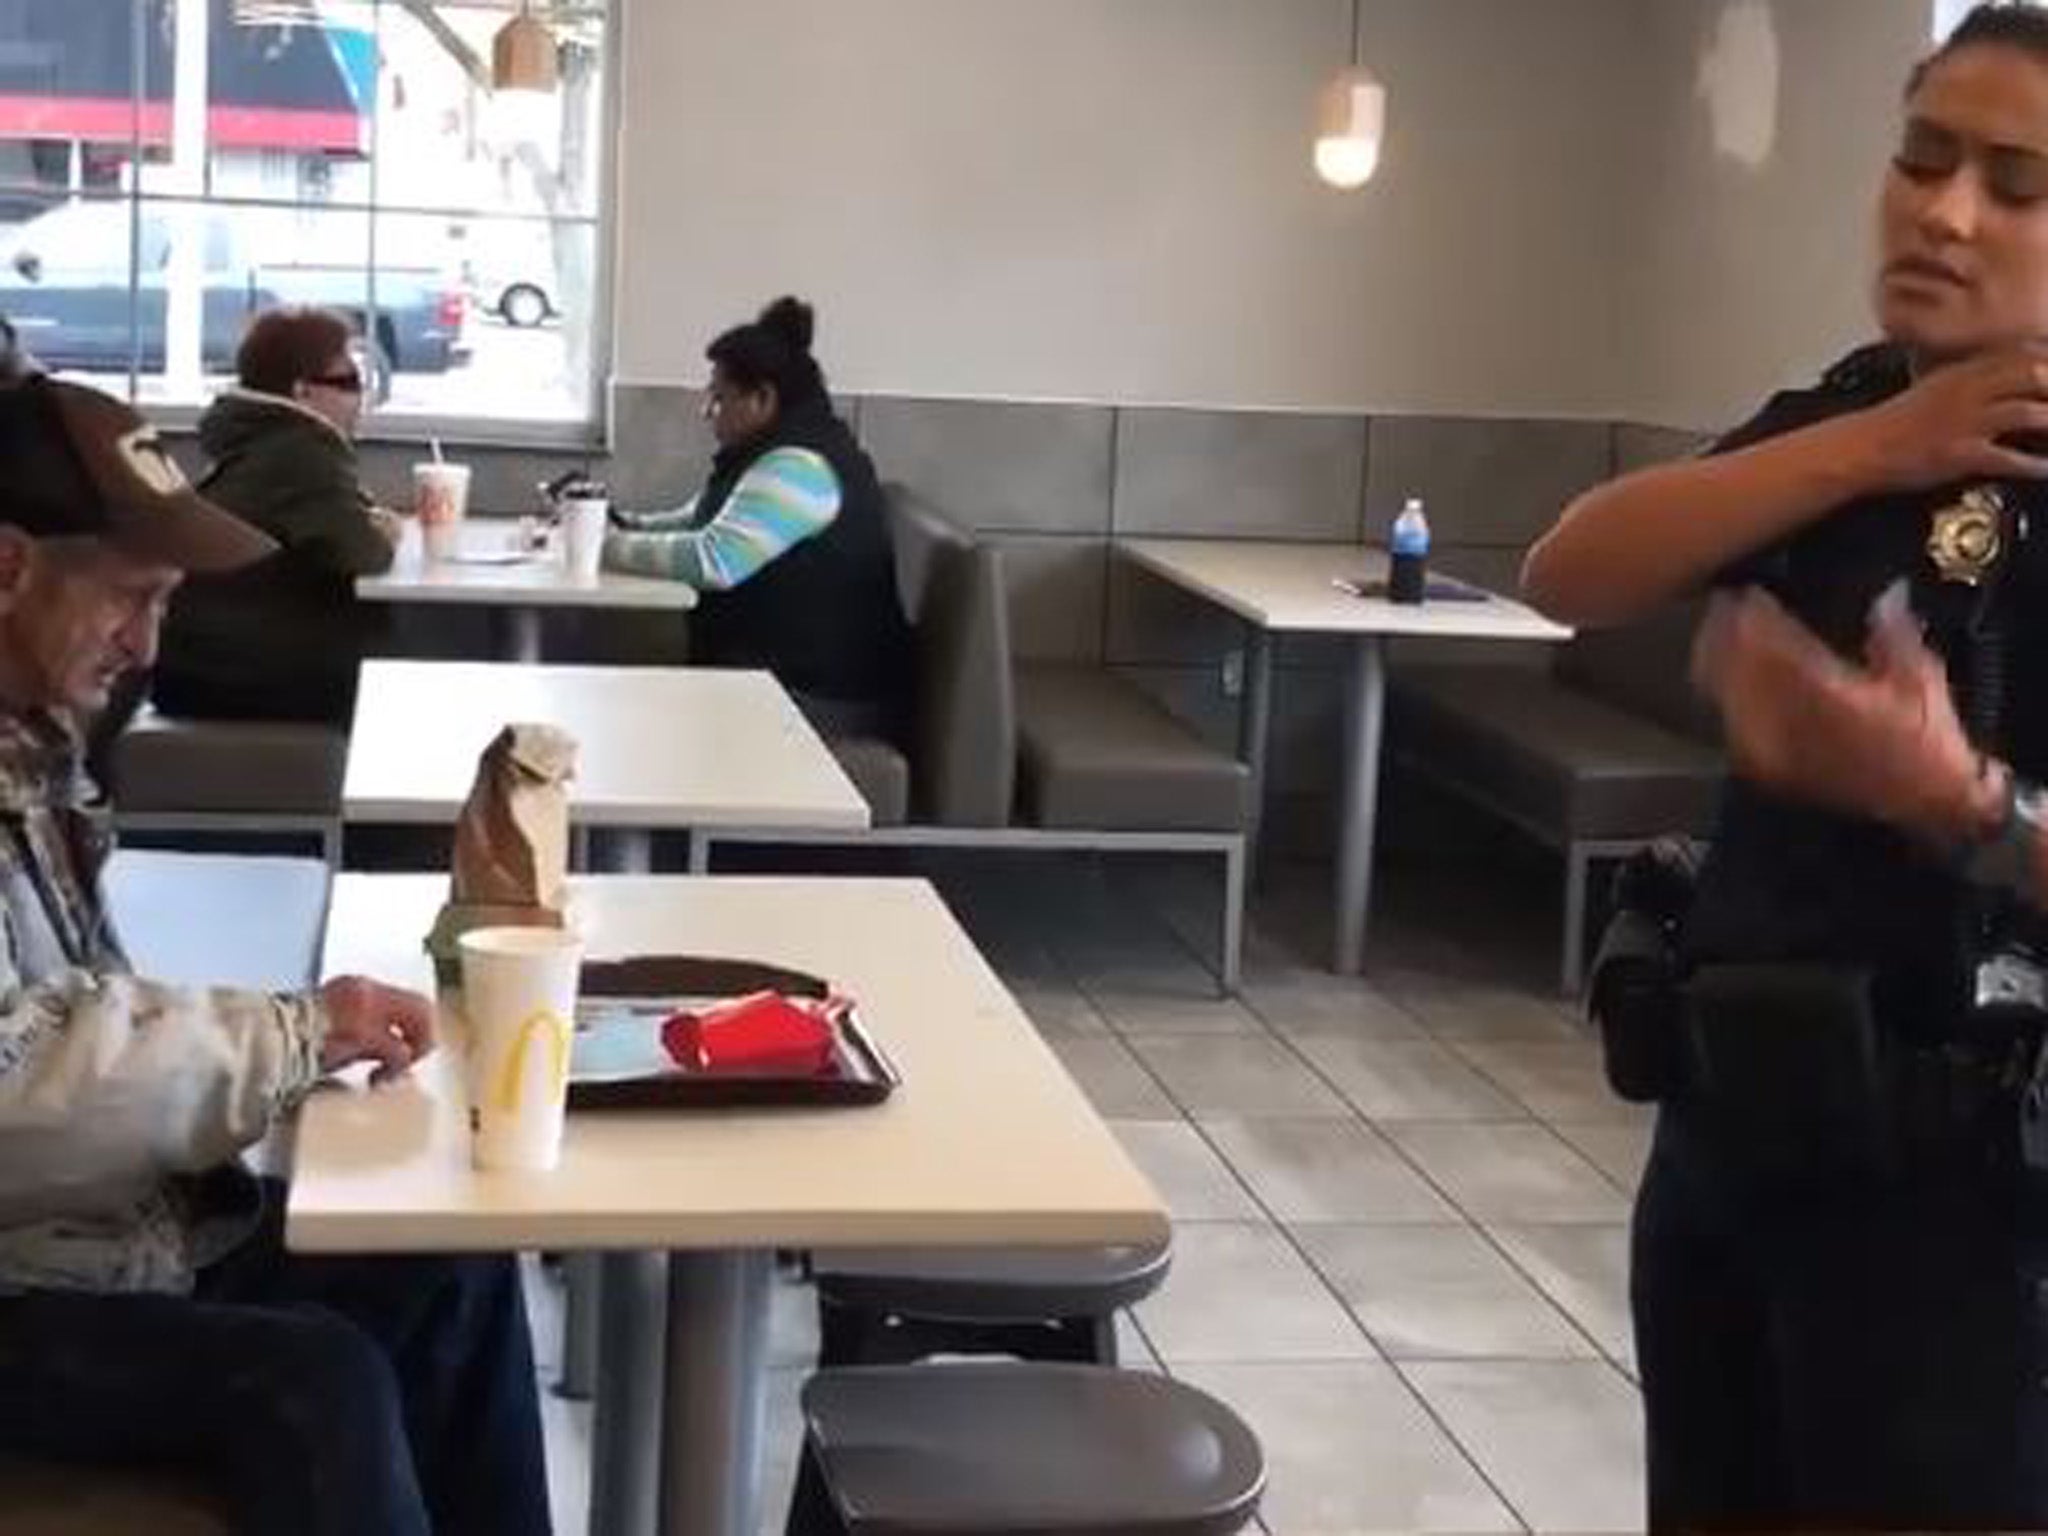 McDonald's kick out homeless man after customer buys him food | The ...